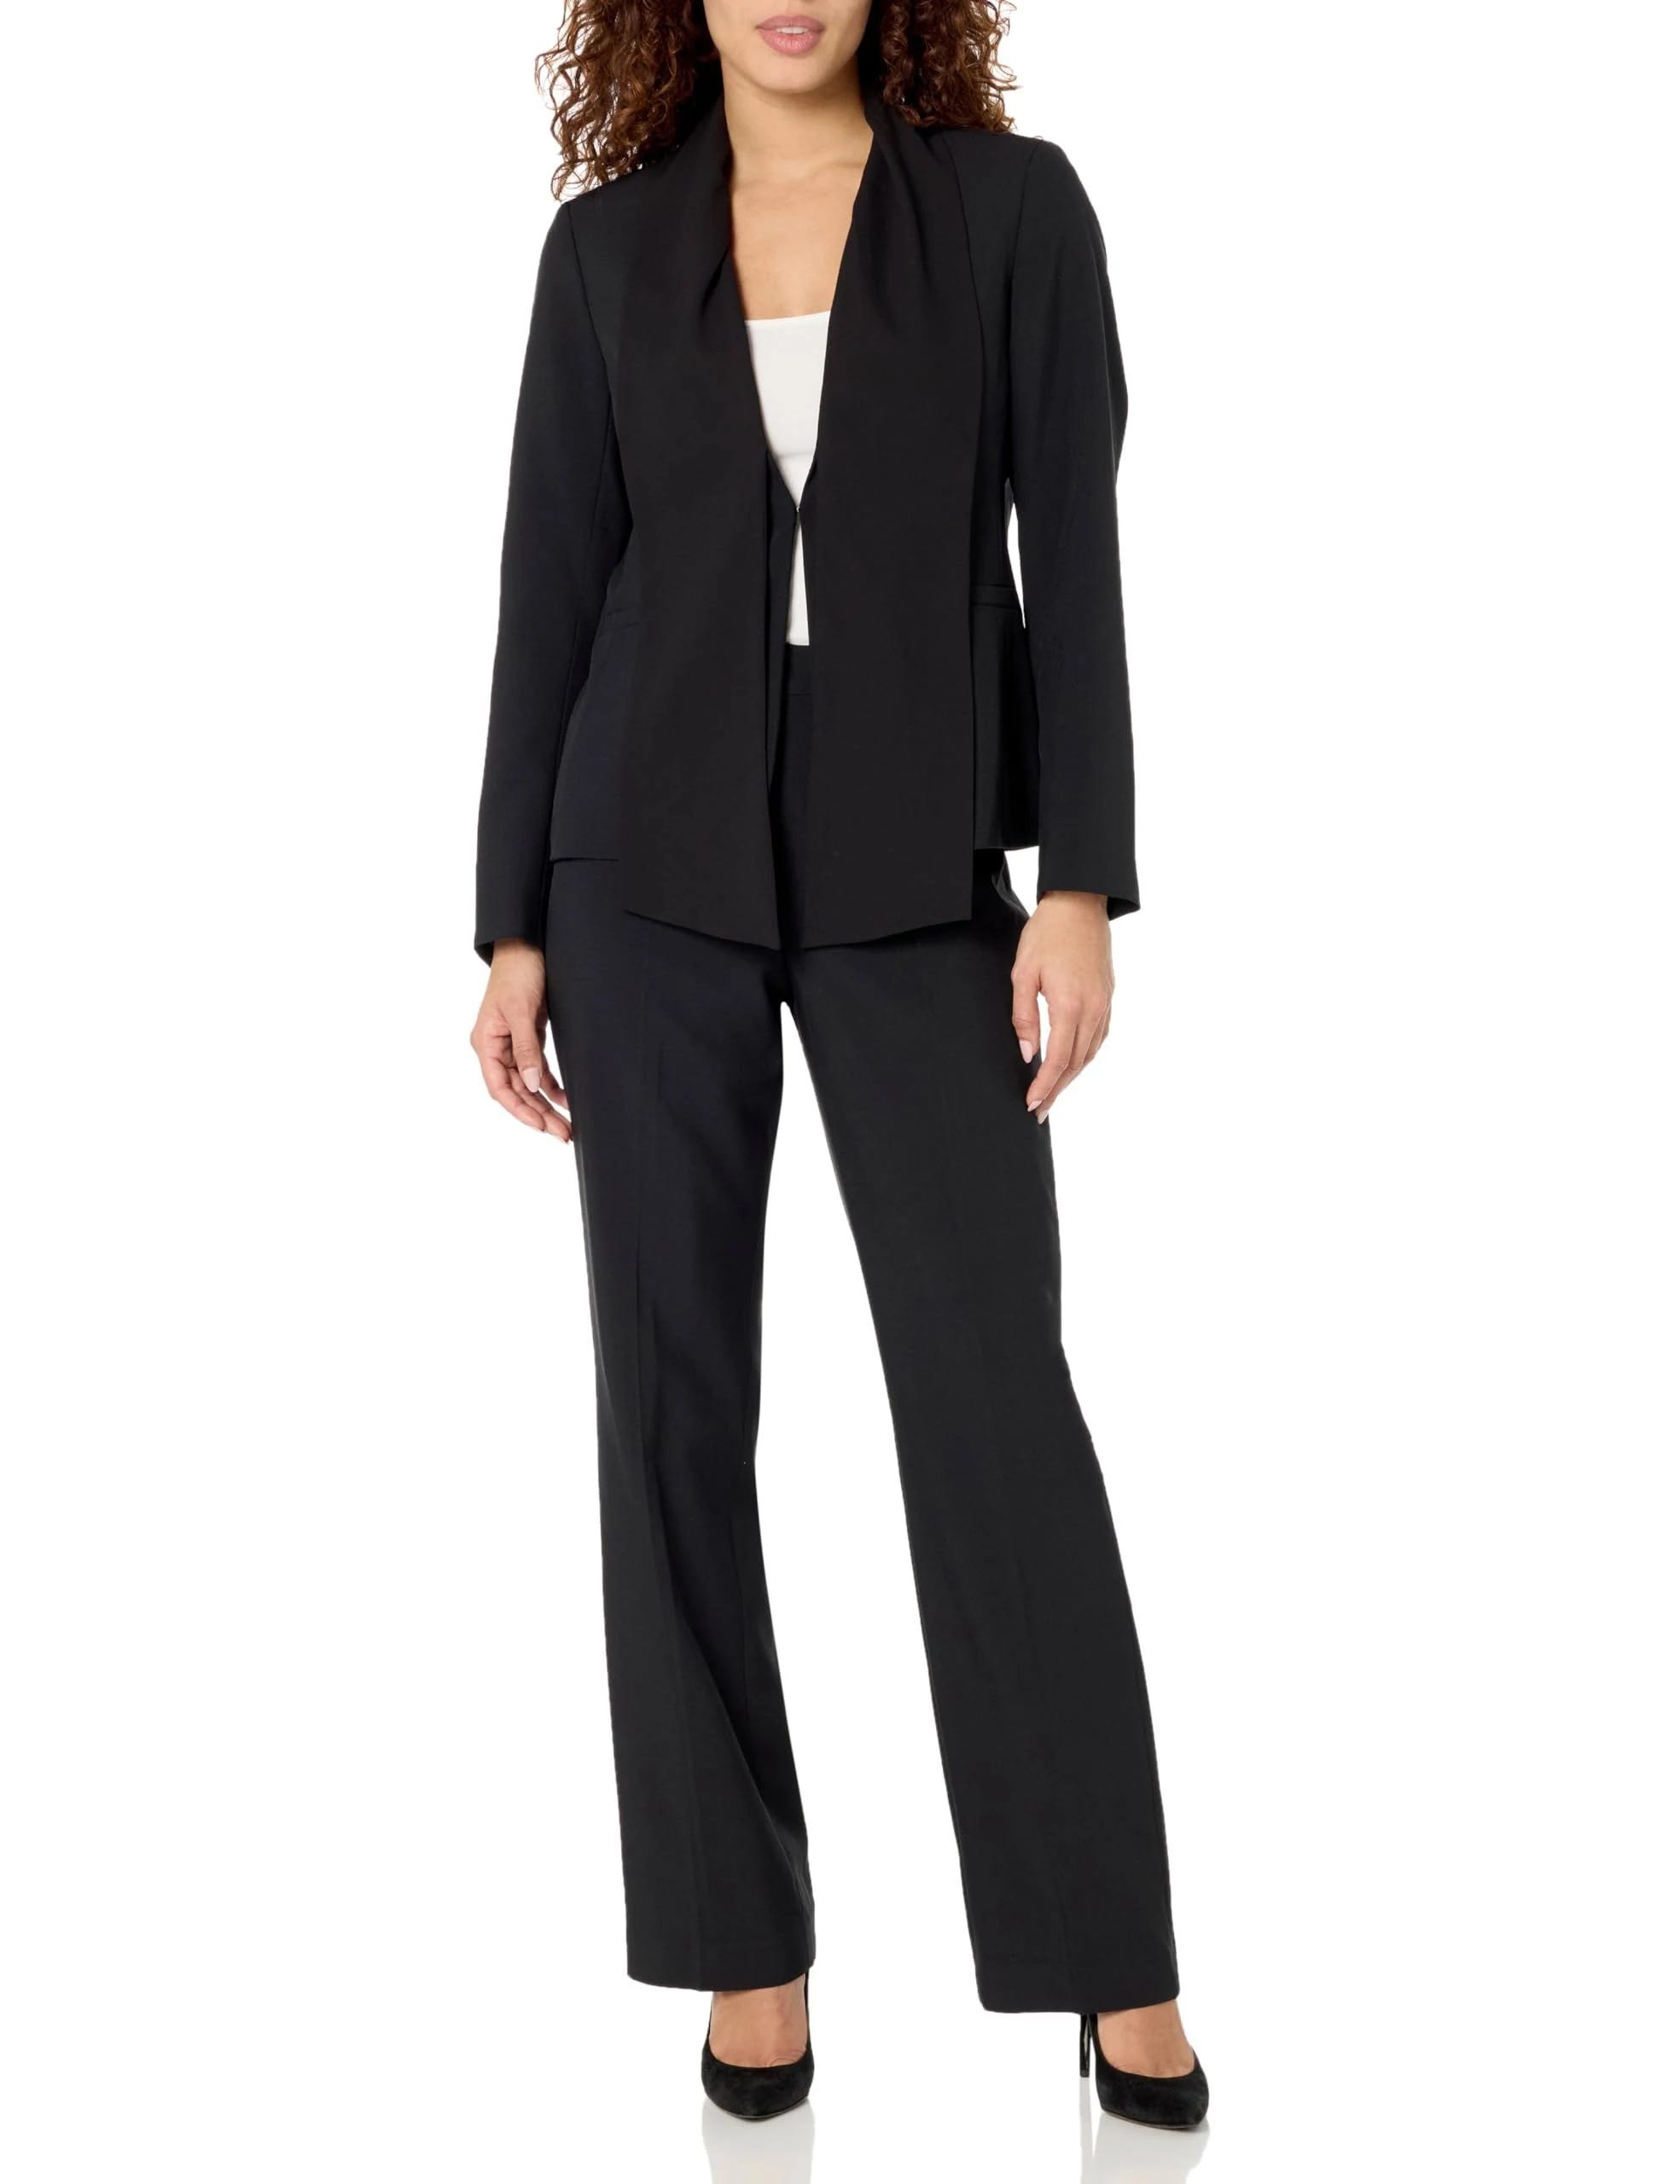 Elegant Black Scarf Collared Jacket and Pant Set for Women | Image